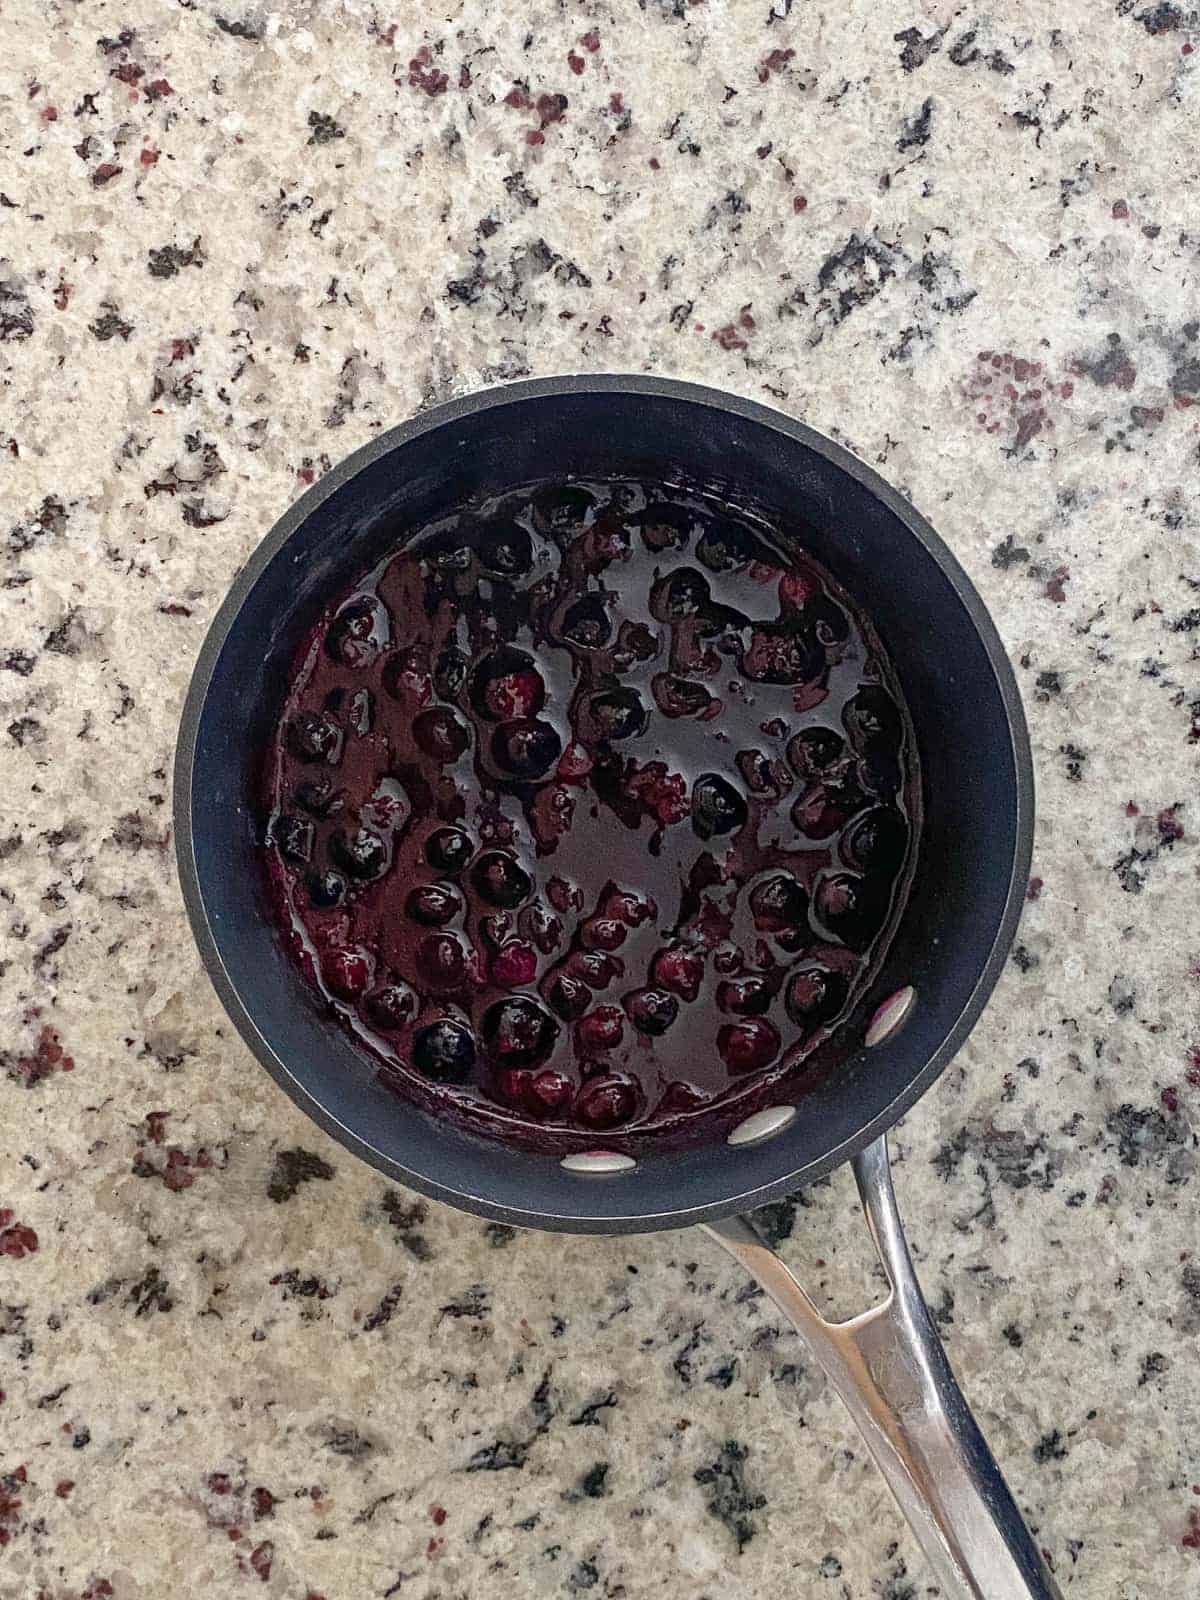 Making blueberry buttercream, step 1.